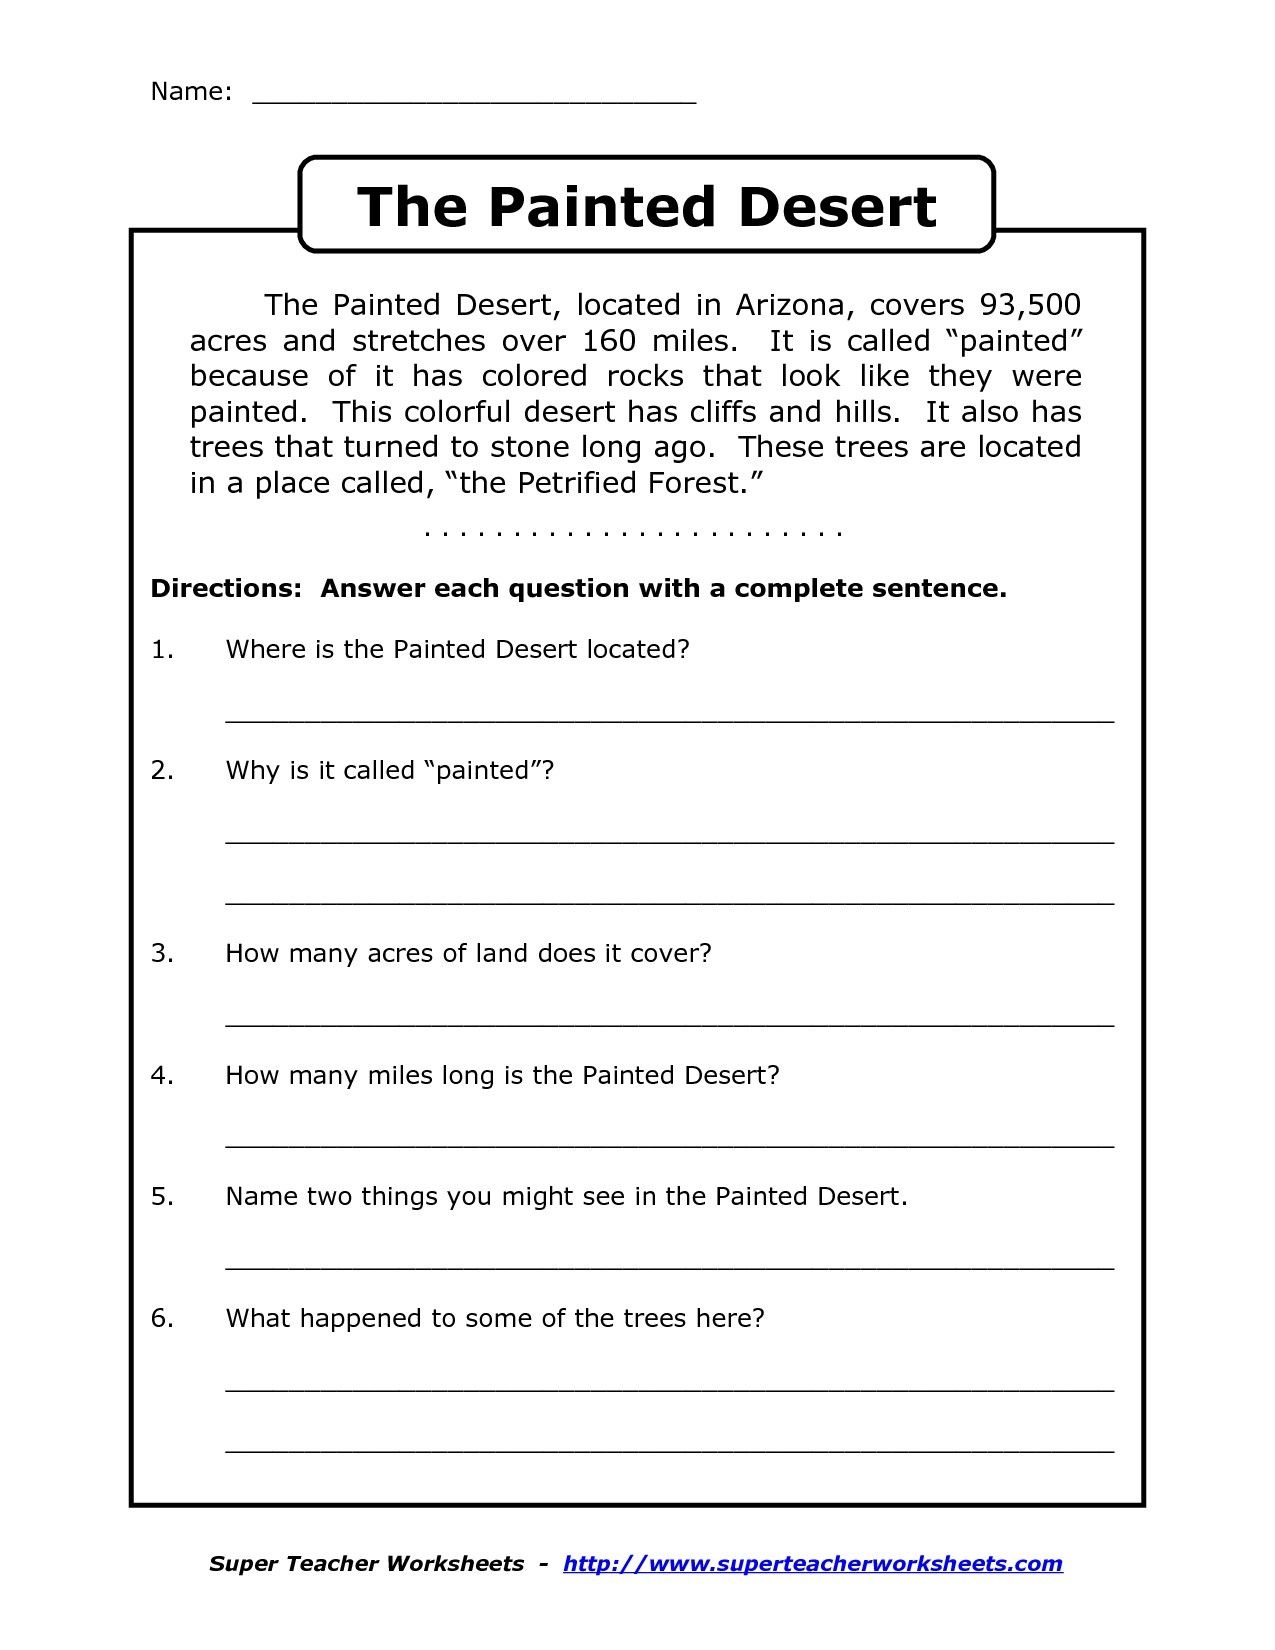 Free Printable Reading Comprehension Worksheets Grade 5 Free Printable